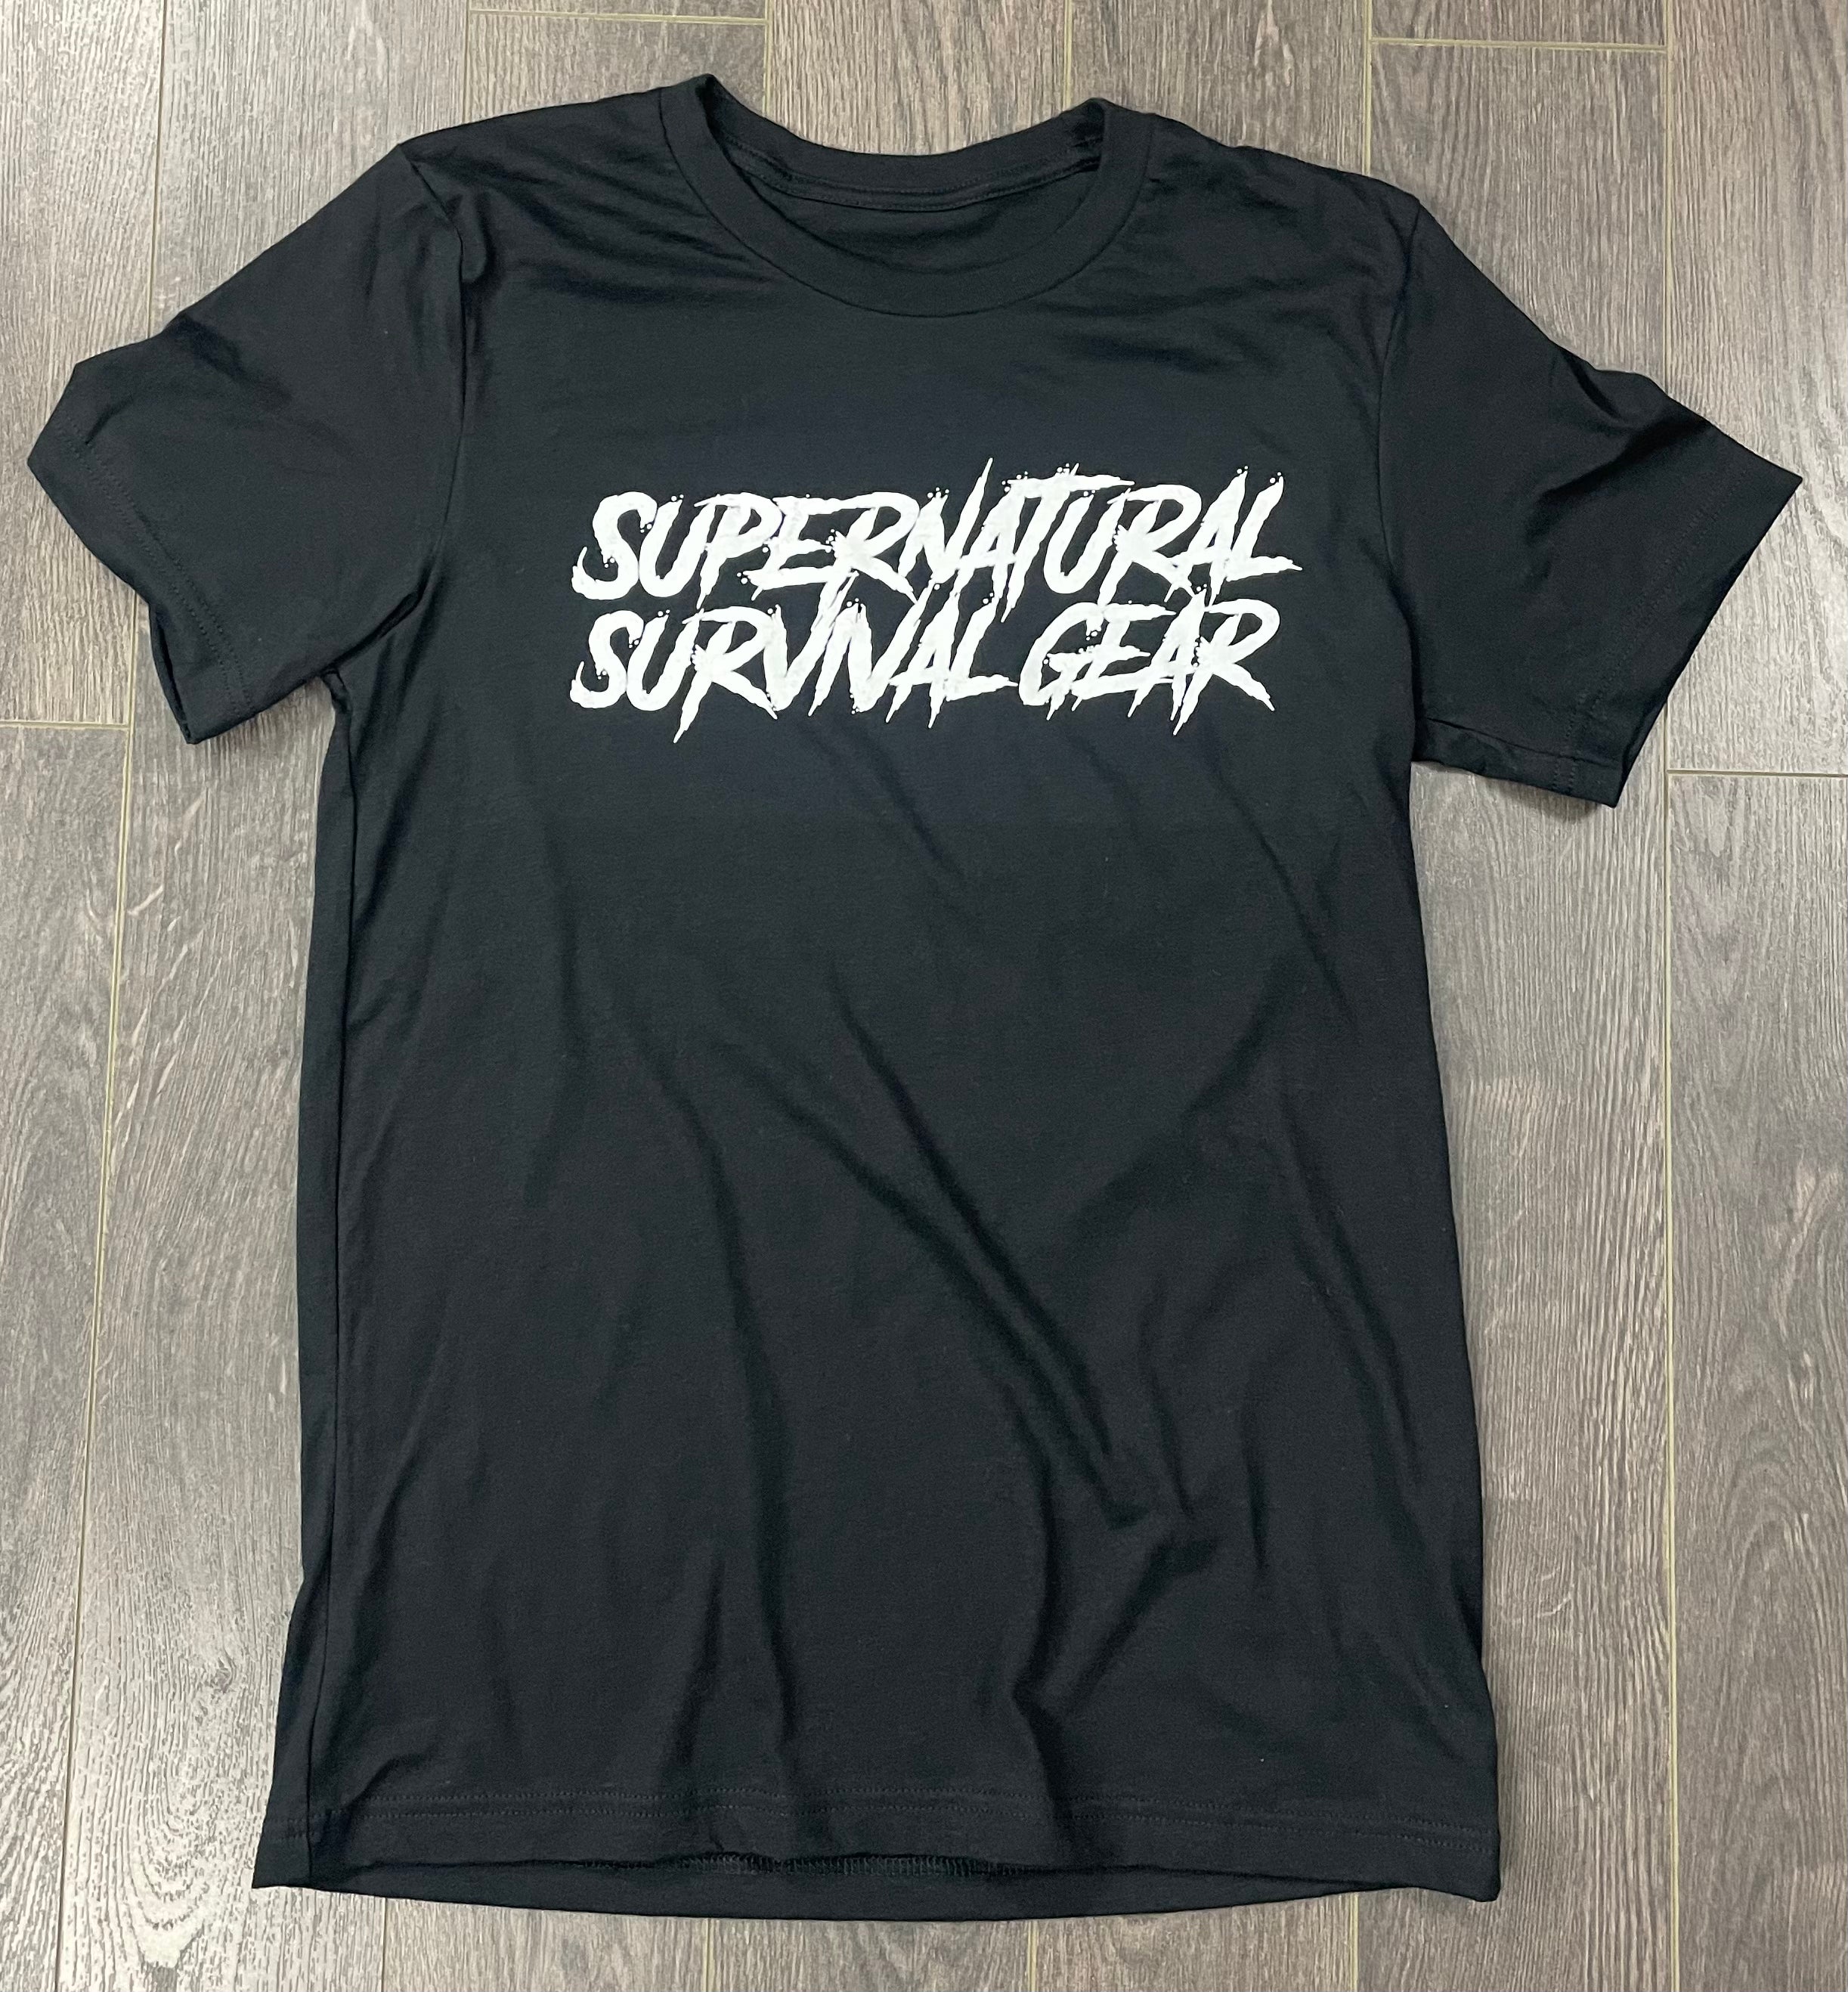 Supernatural Survival Gear "Original Tee”